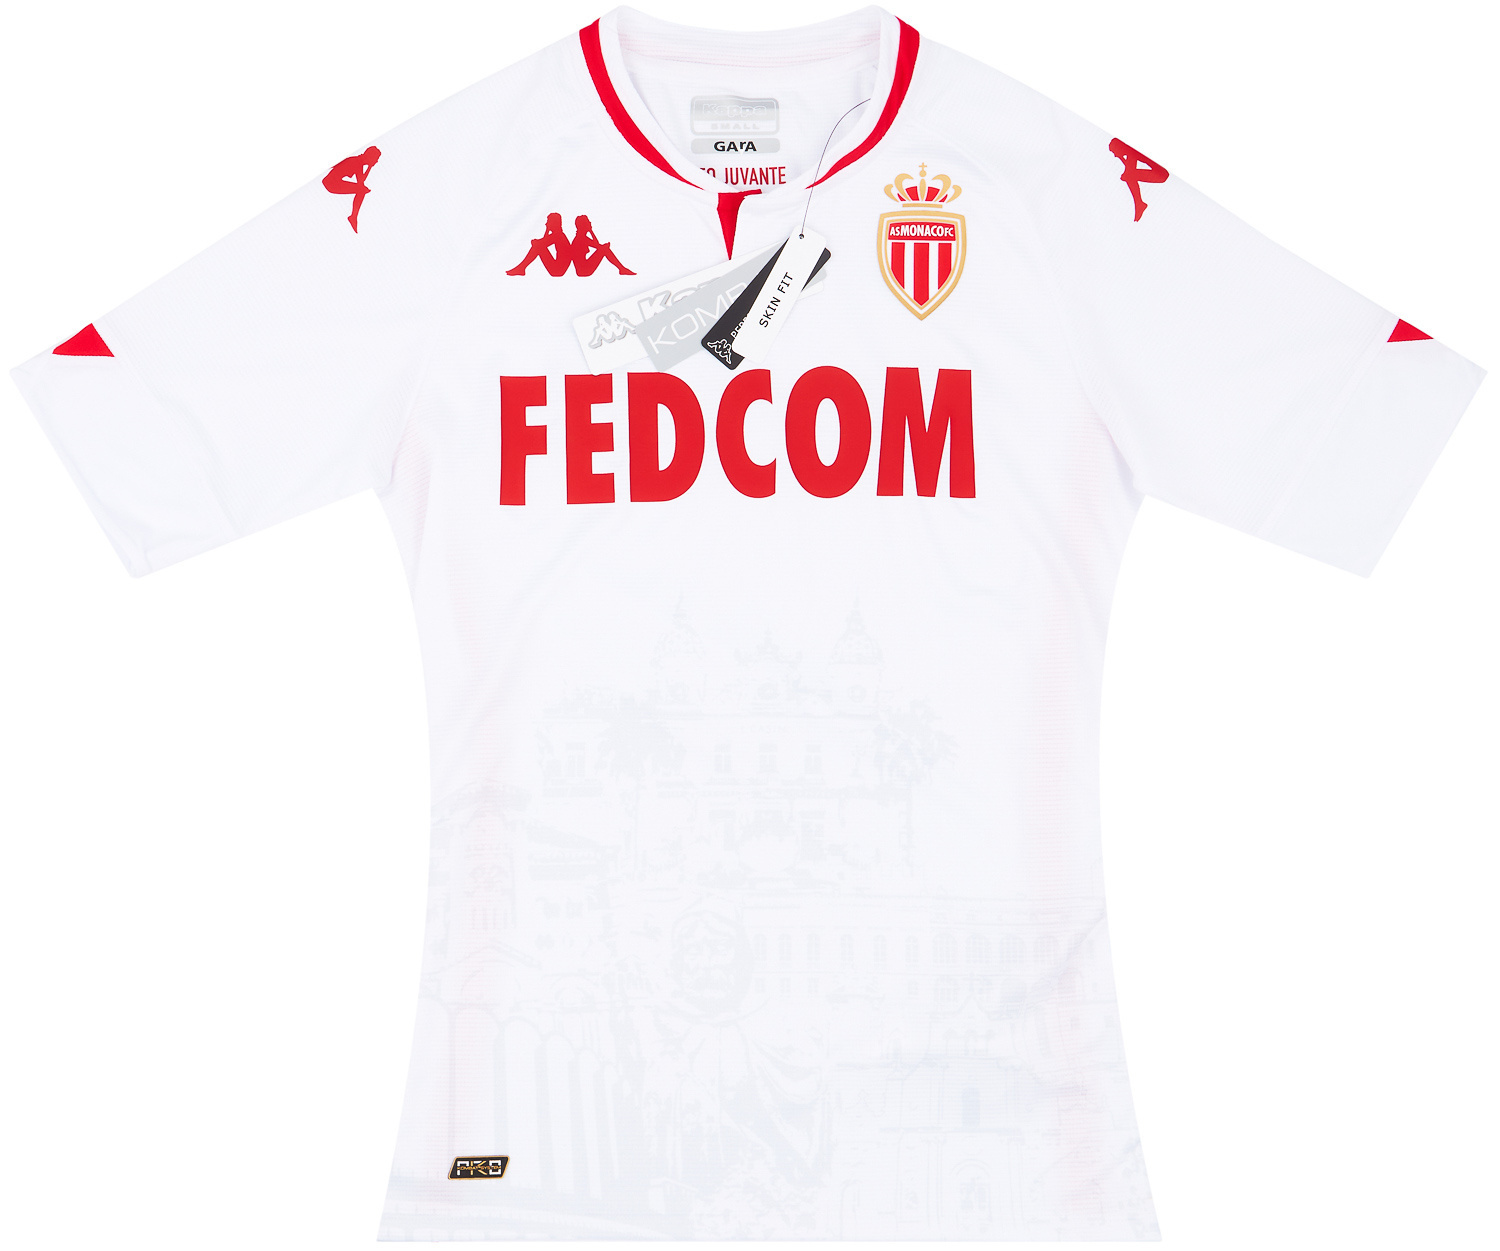 Monaco  Terceira camisa (Original)